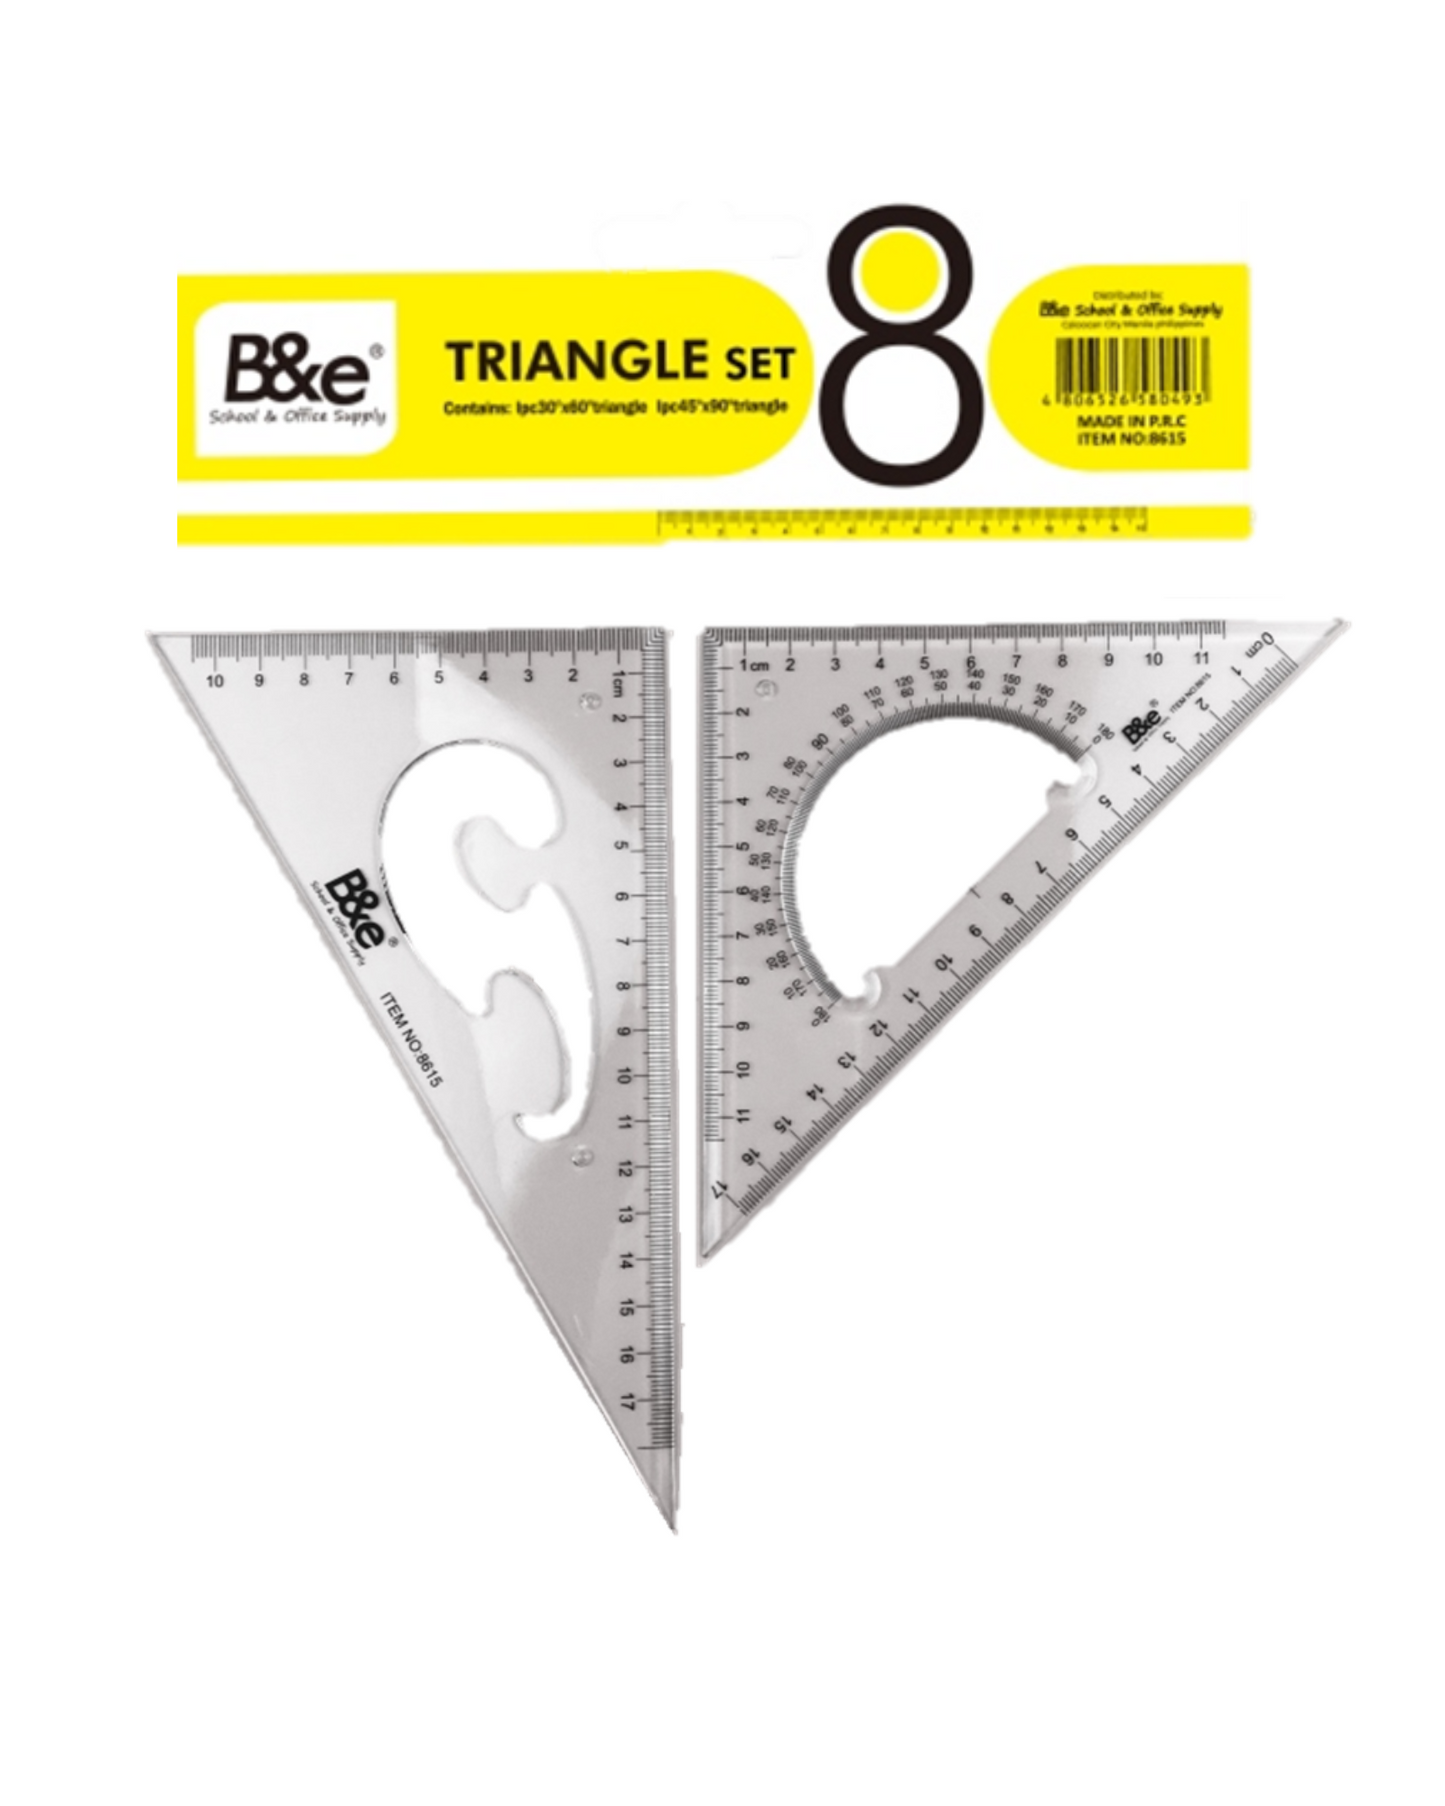 B&e Triangle Ruler Set No. 8615 (30/60,45/90,8in)